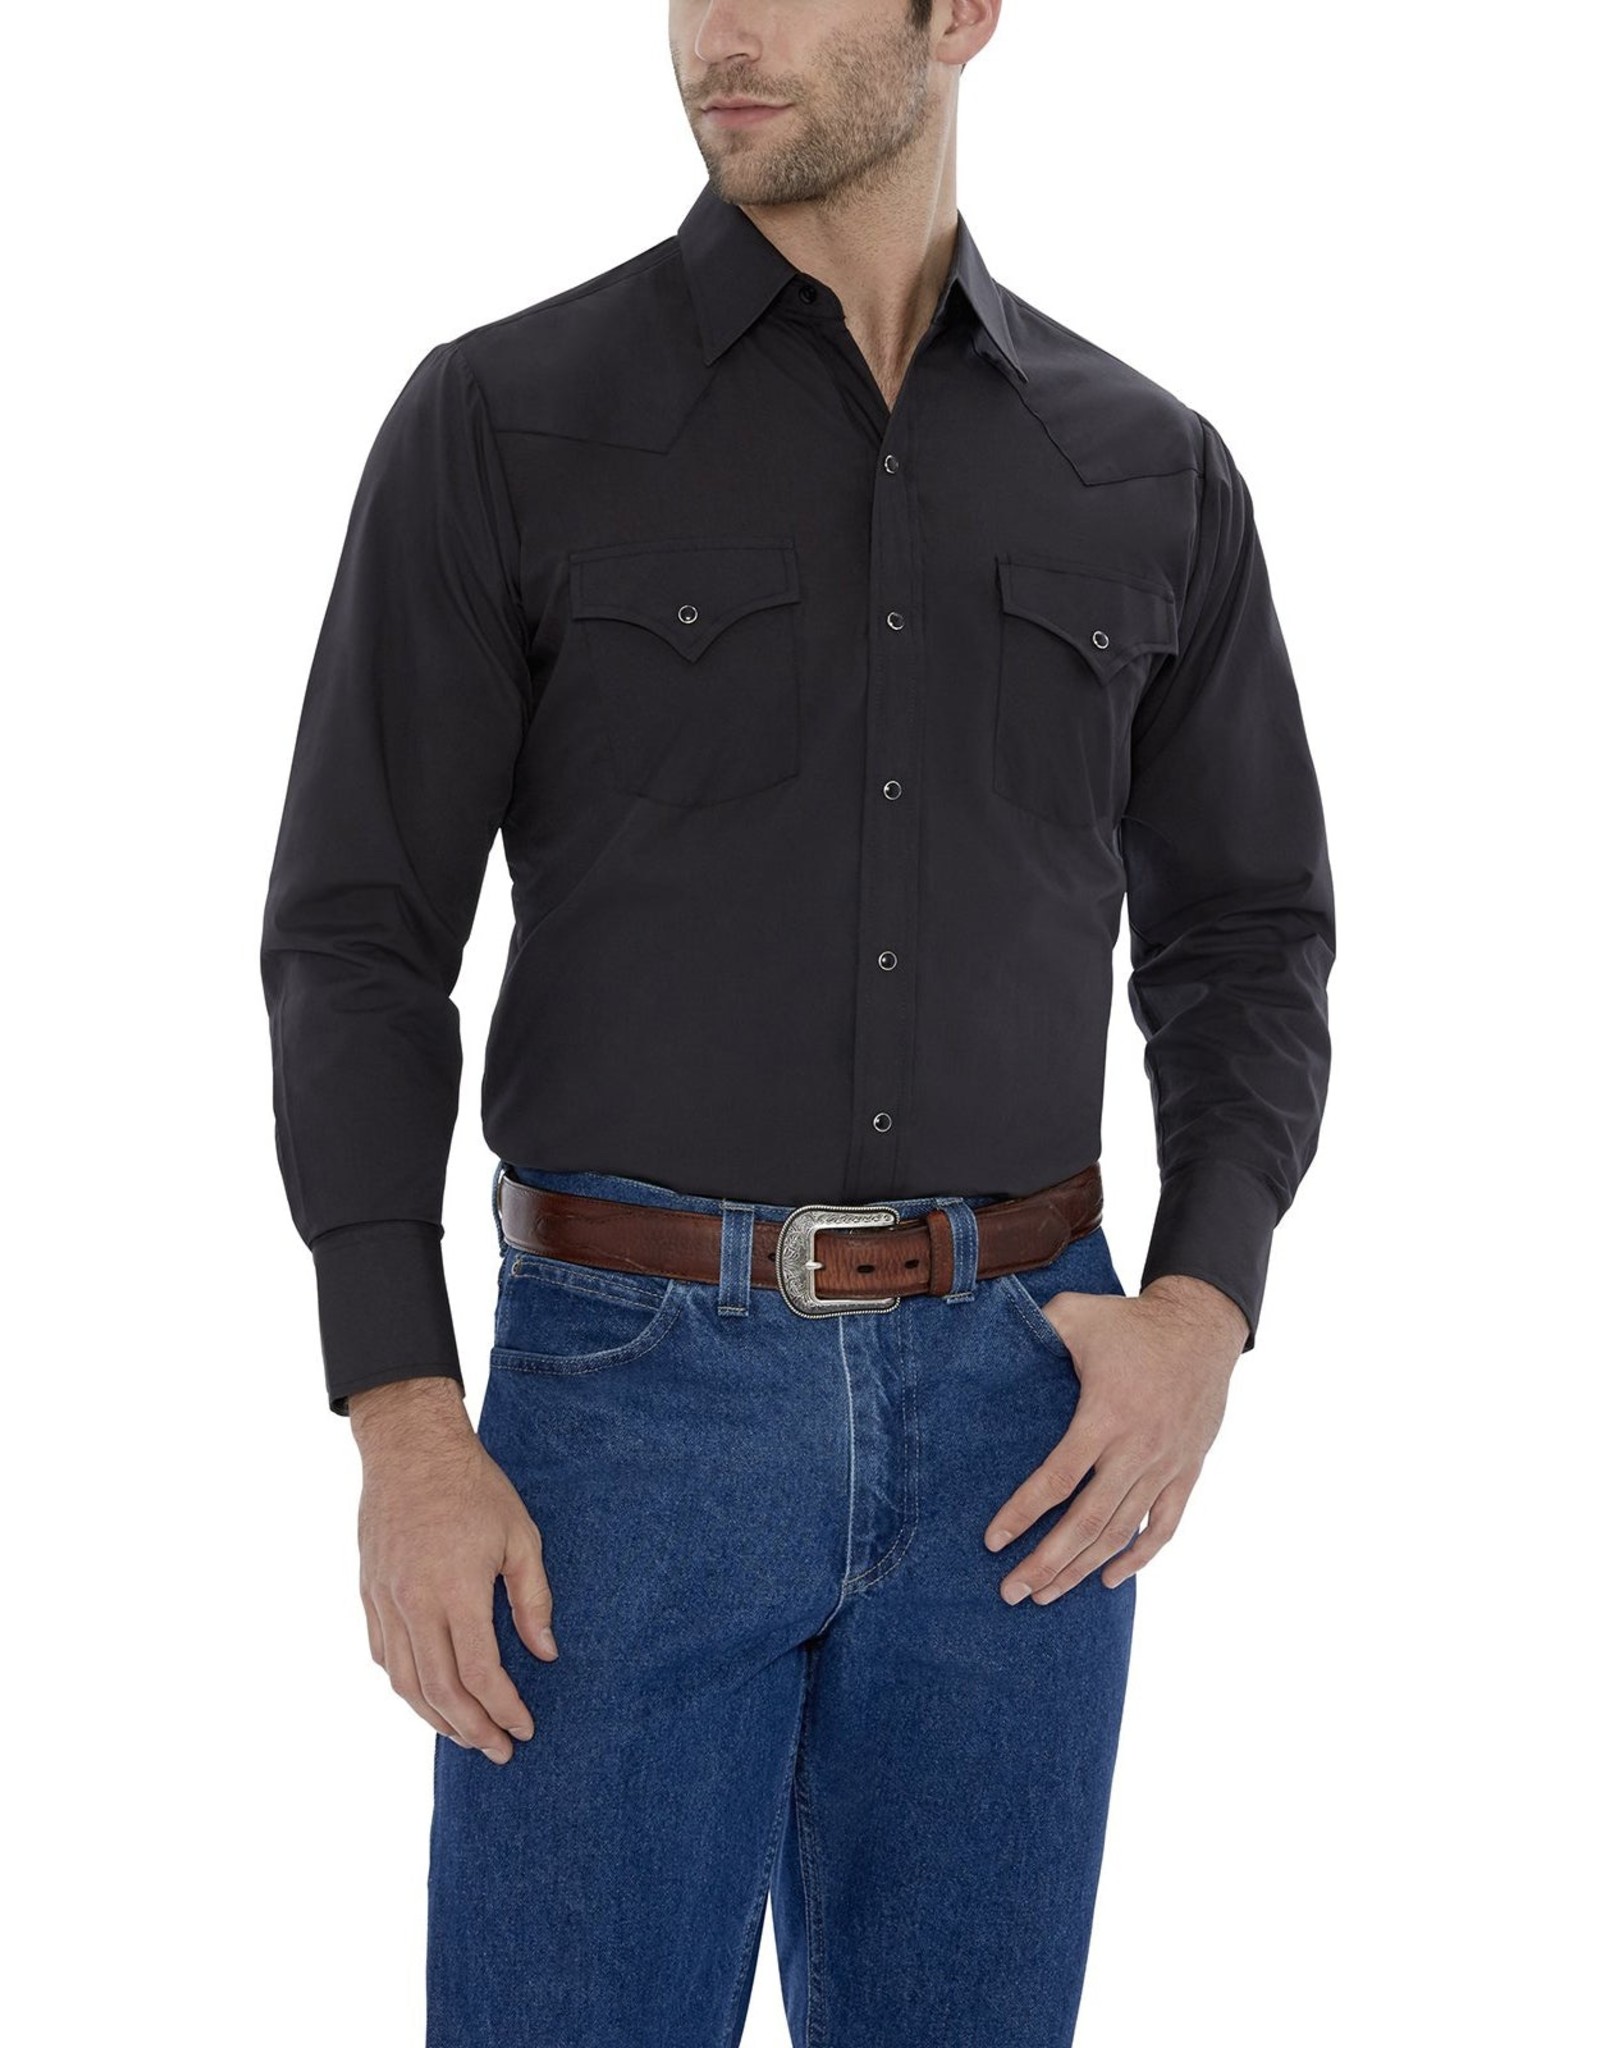 Ely Mens Long Sleeve Shirt in Black Sz. XL 15201905-89